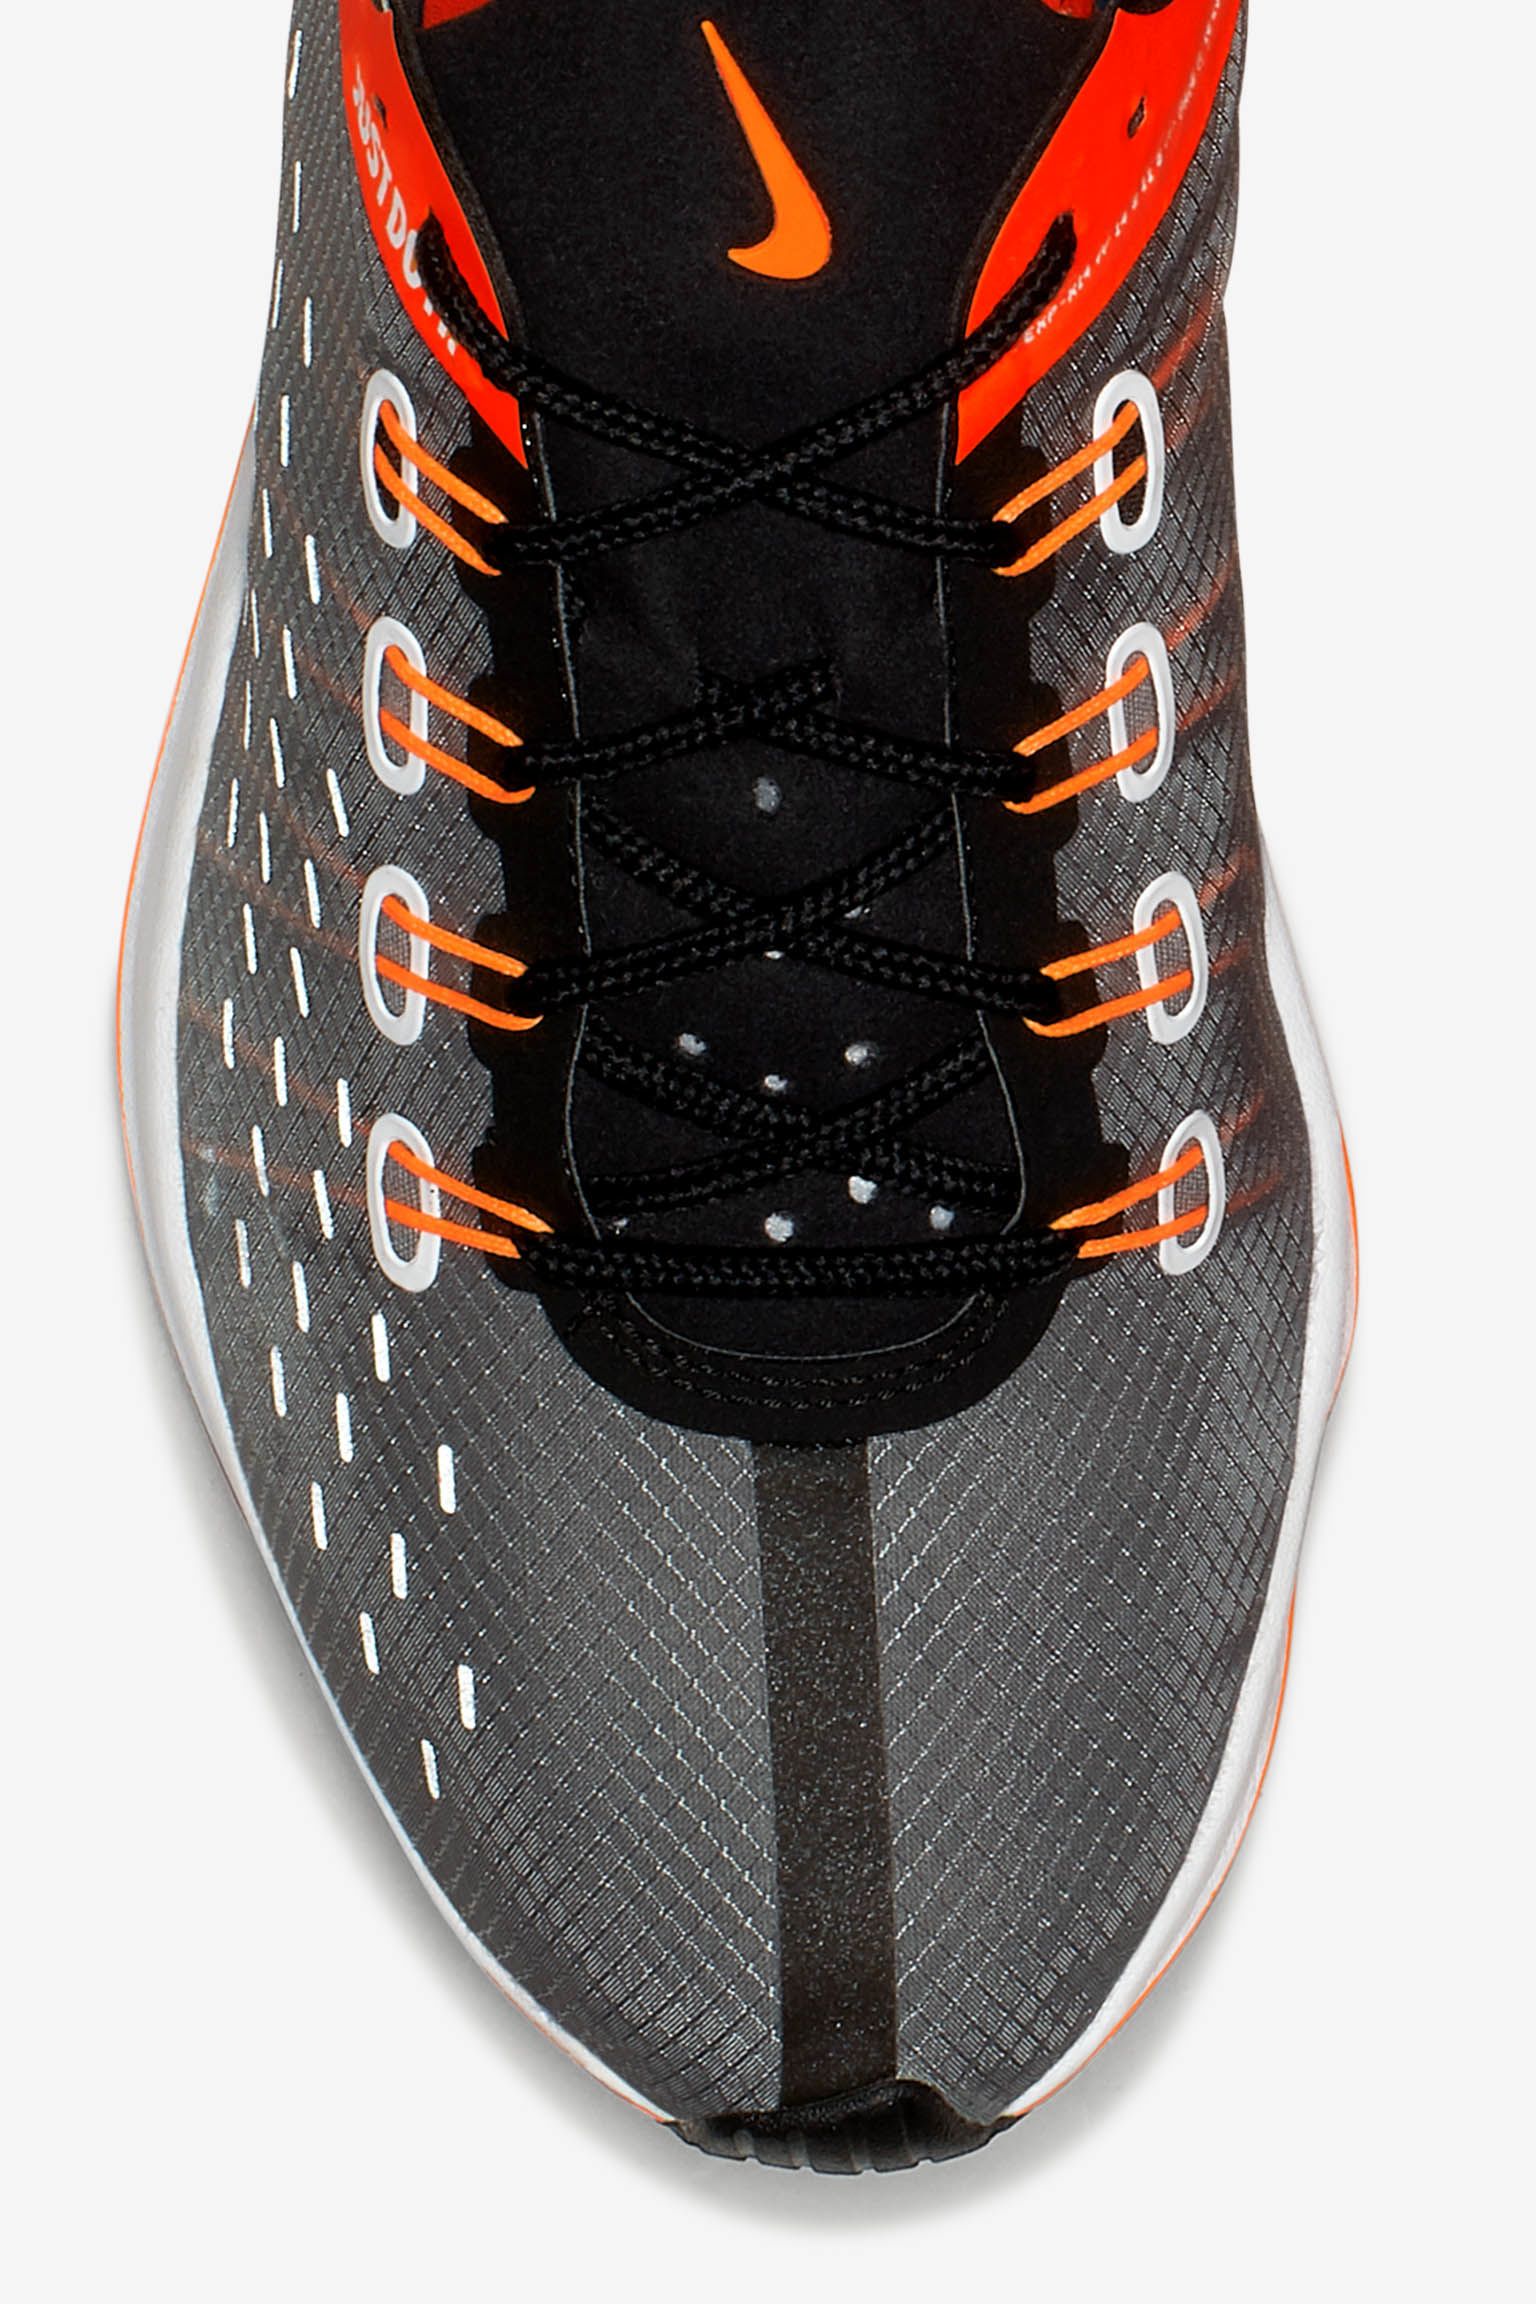 Date de sortie de la Nike EXP-X14 SE « Black & Total Orange & White